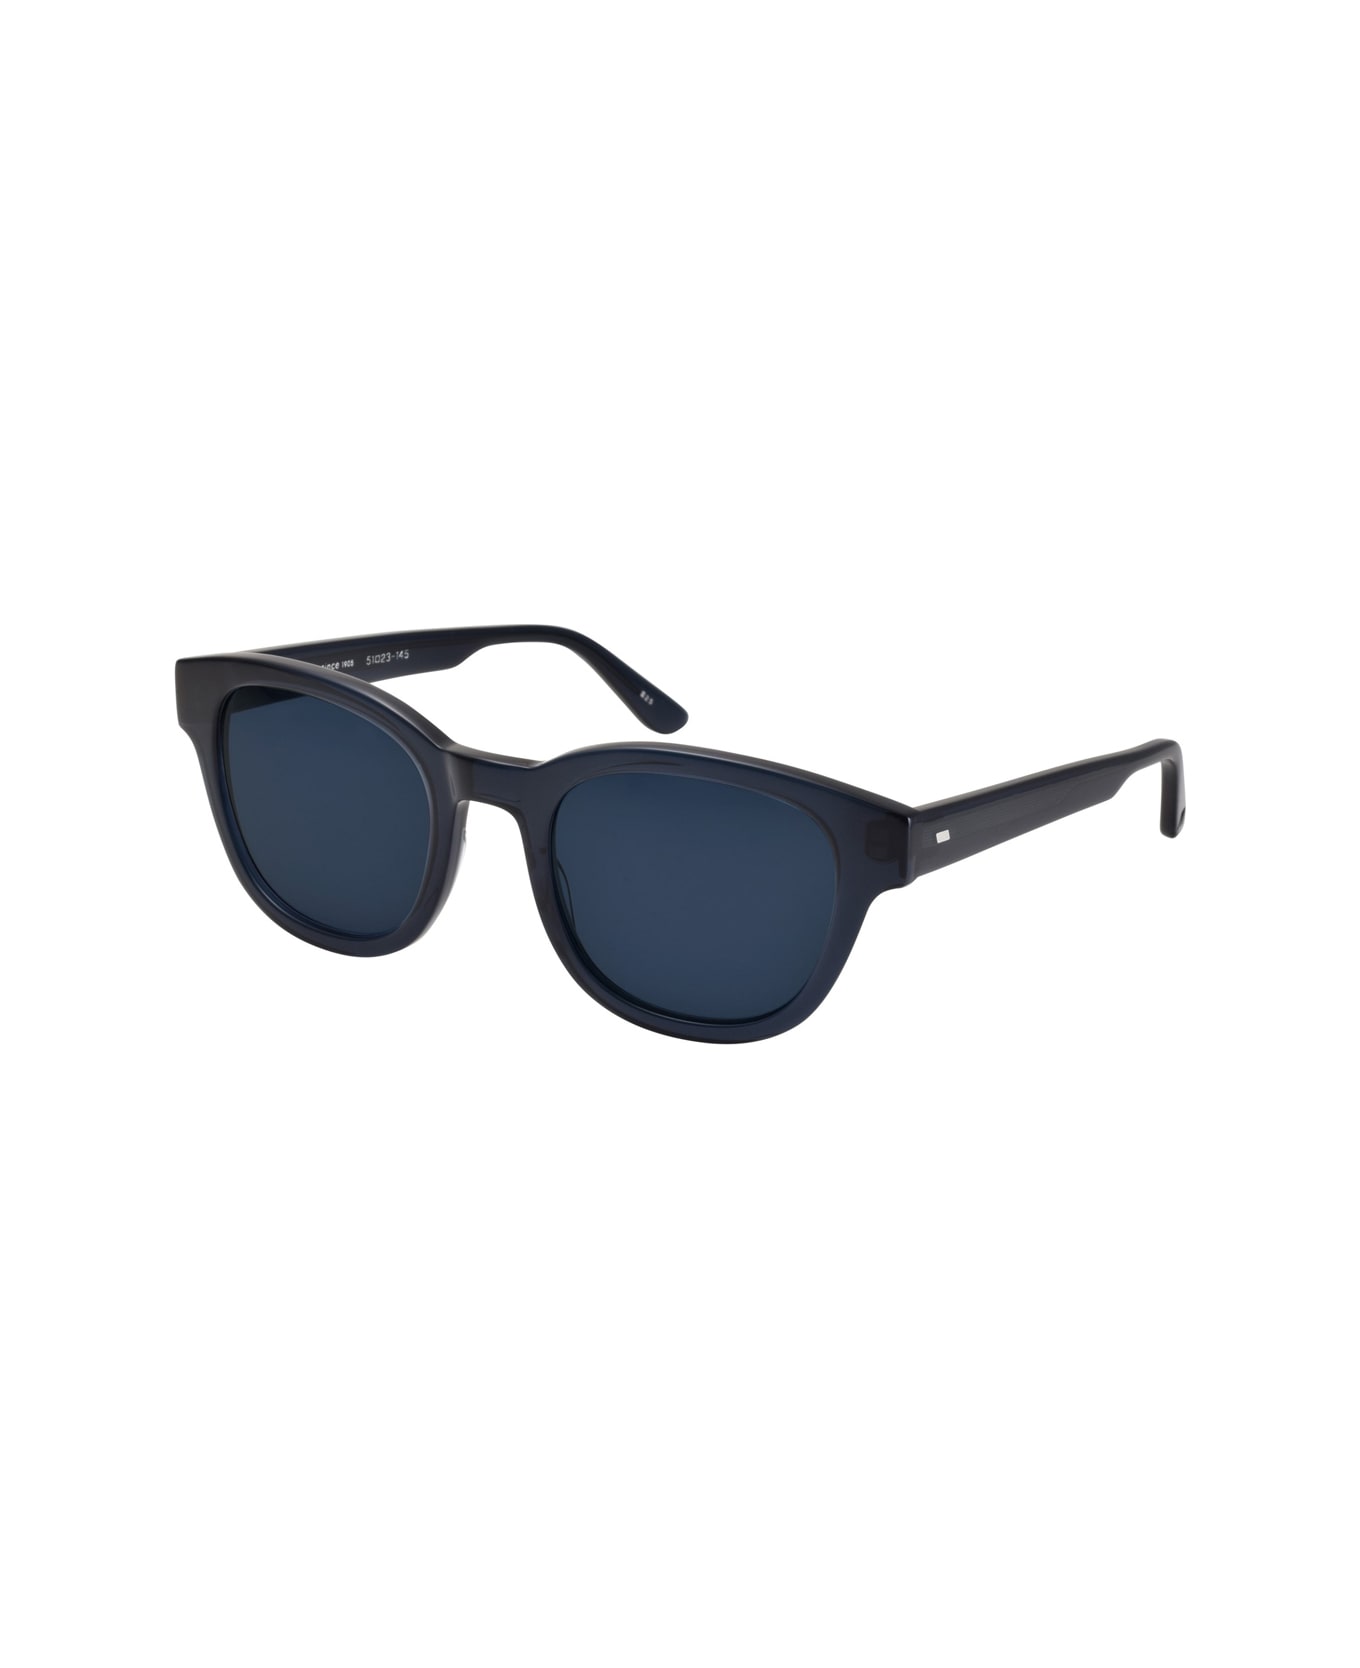 Masunaga Kk 096 S25 Sunglasses - Blu サングラス